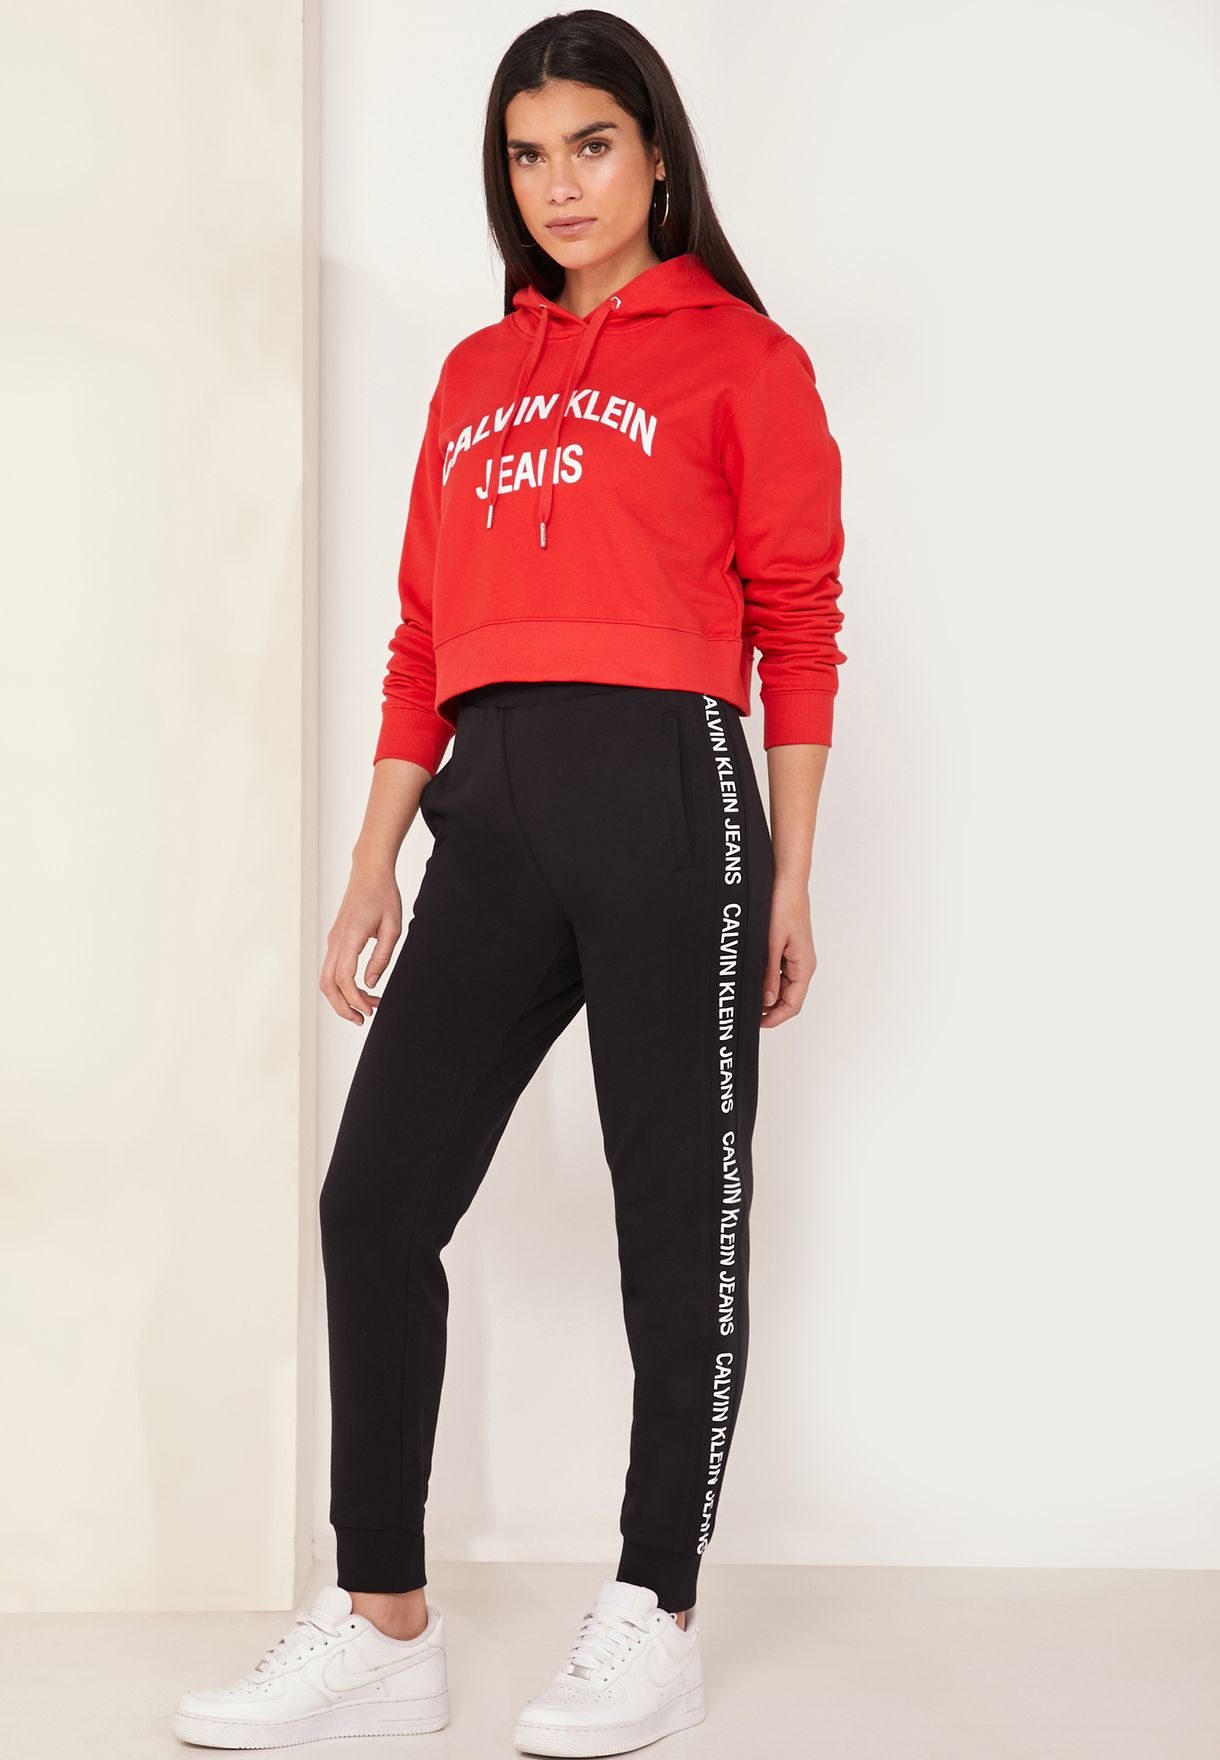 Stijgen AIDS formule Buy Calvin Klein Jeans red Institutional Curved Logo Crop Hoodie for Women  in MENA, Worldwide